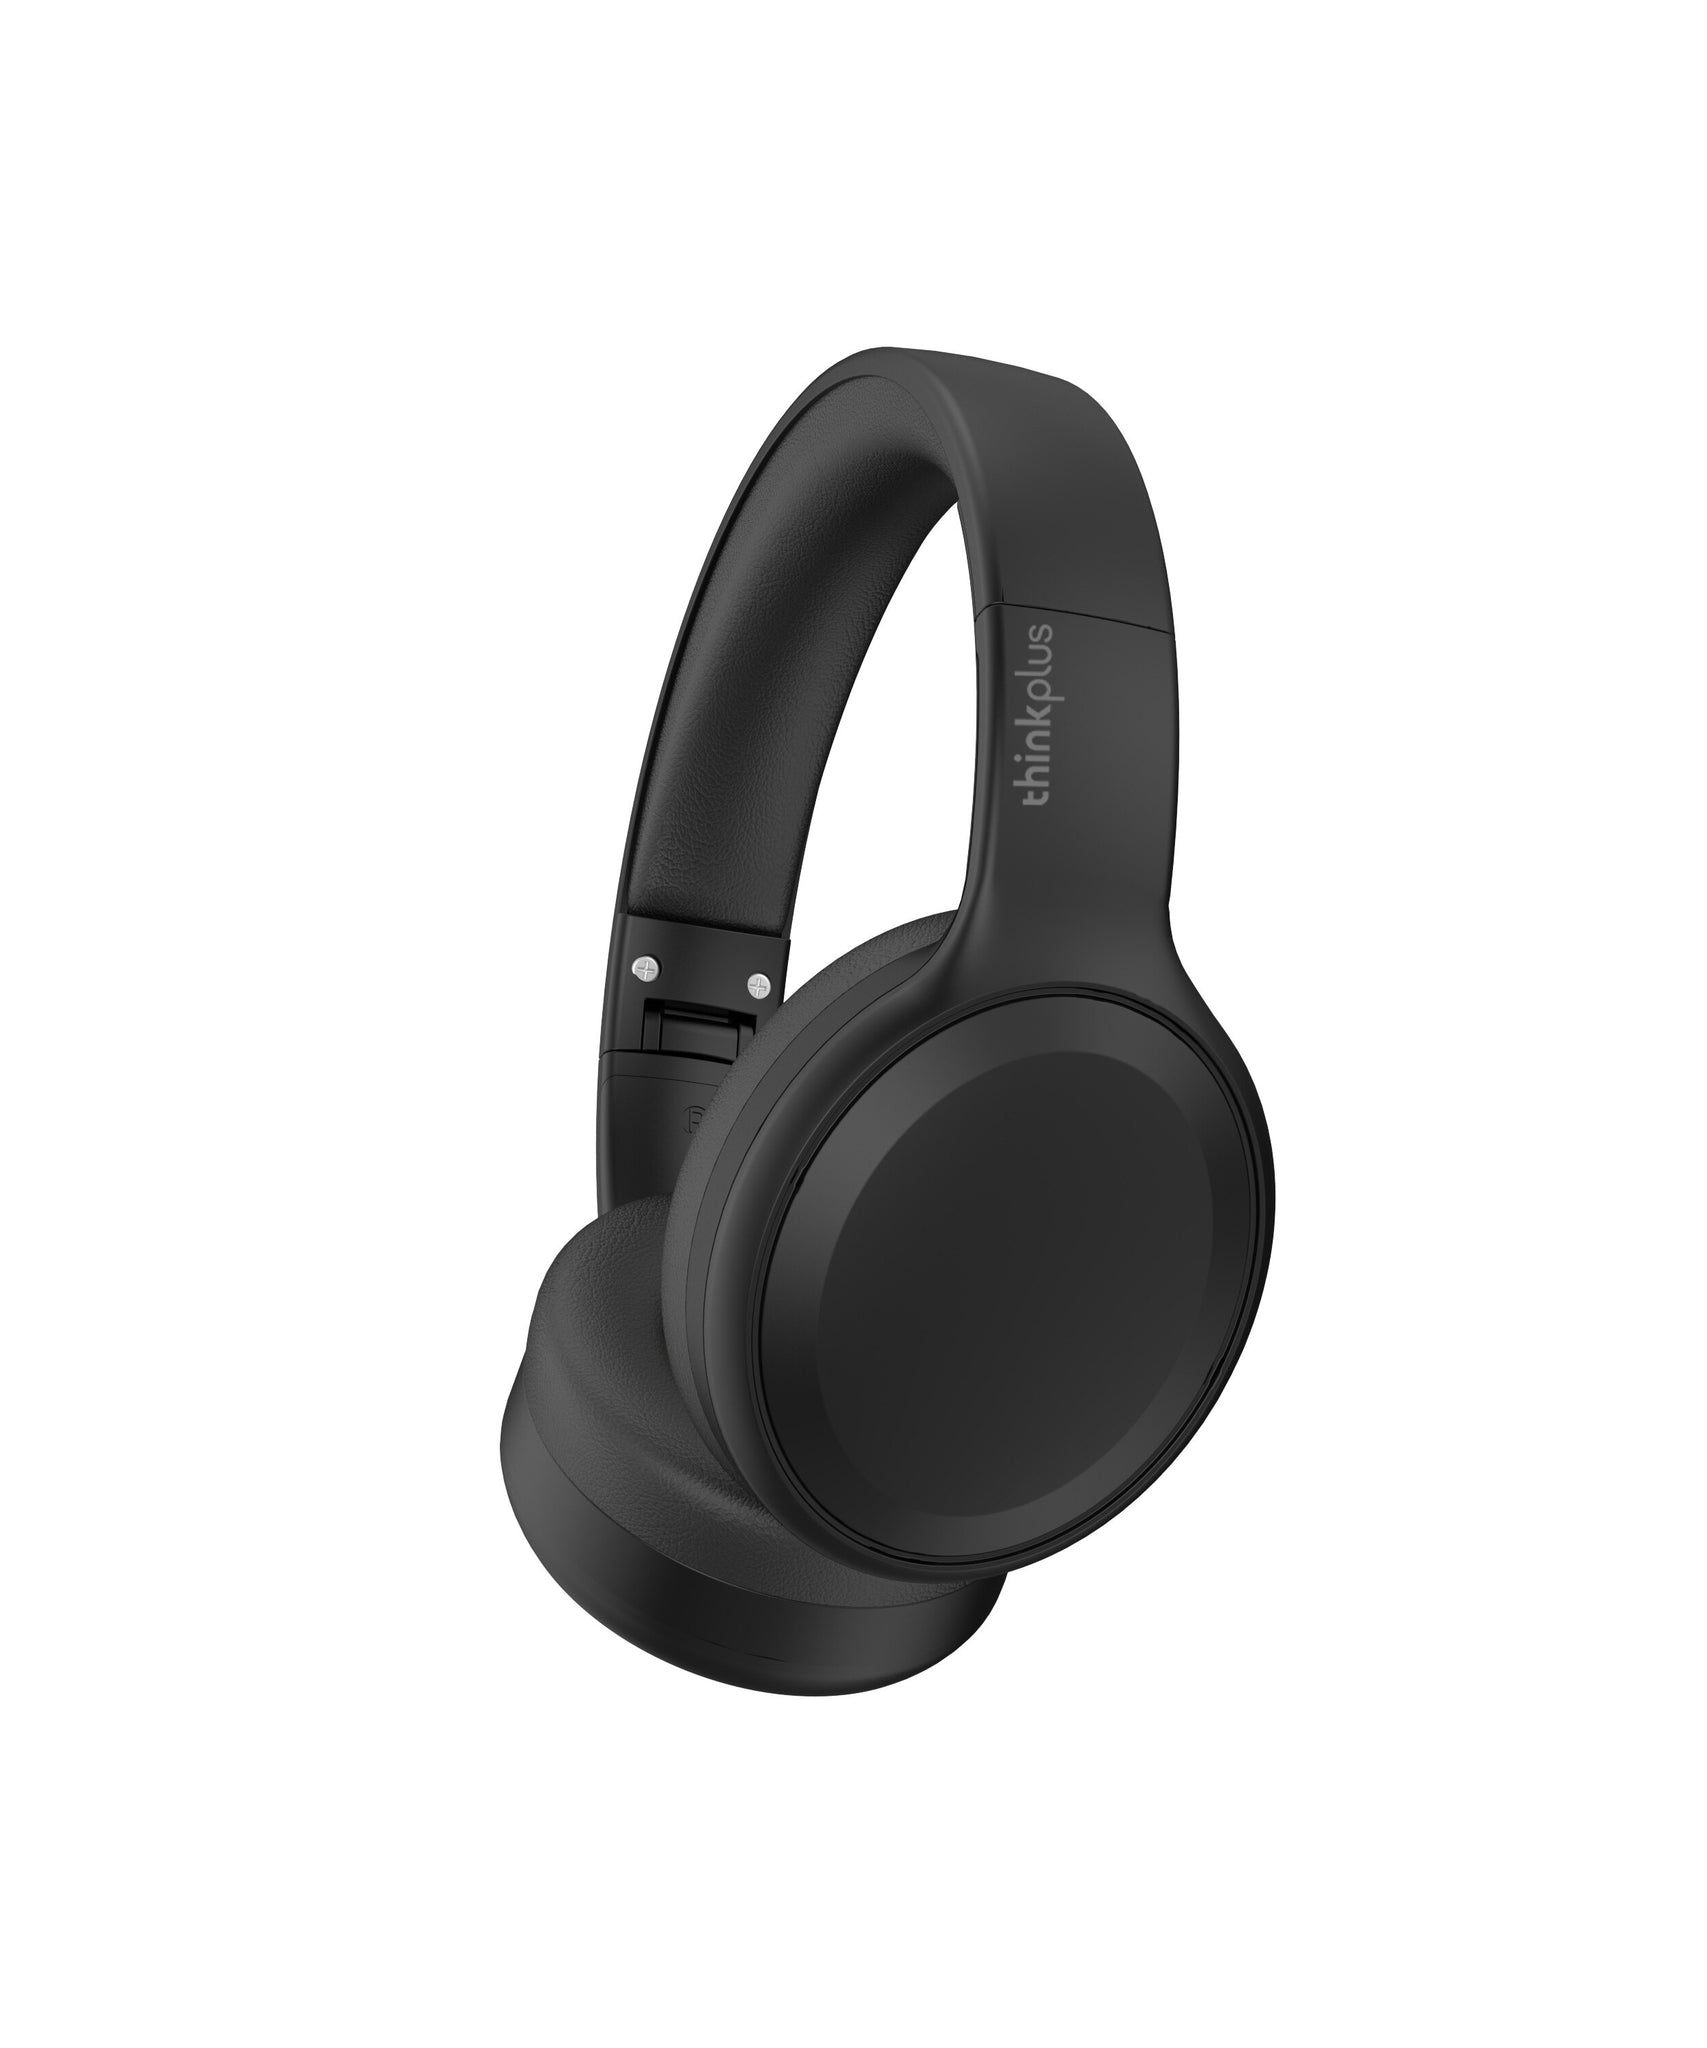 Lenovo TH30 Wireless Headphones Bluetooth 5.0 Earphones Foldable Gaming Headset Sport Headphone with Mic Music Earbuds 250mAh